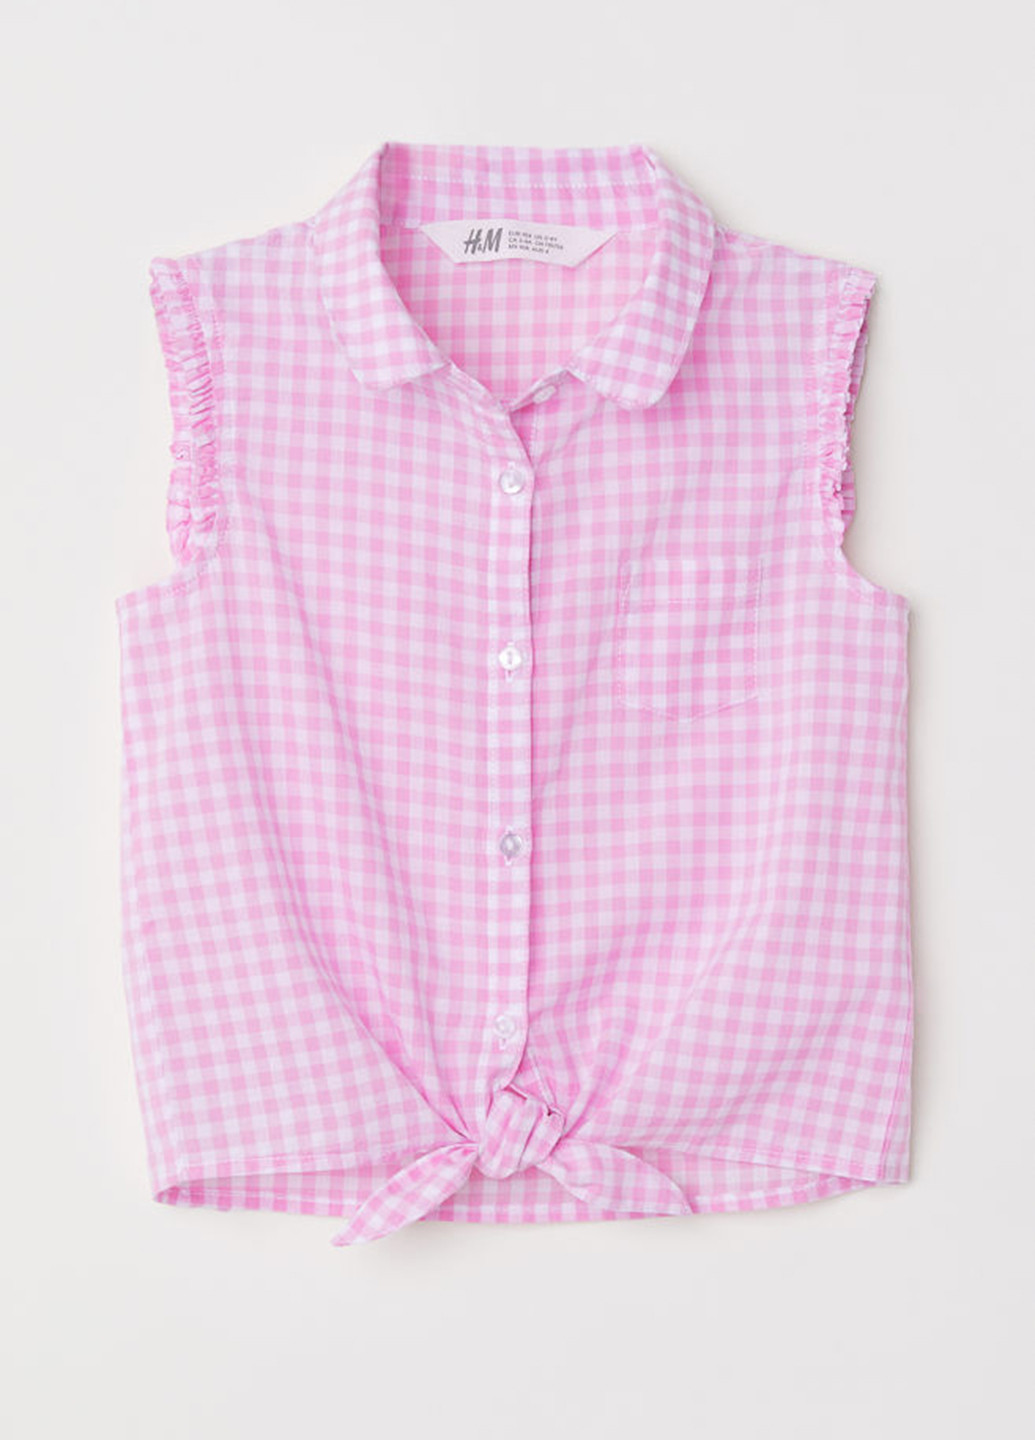 Светло-розовая в клетку блузка H&M летняя